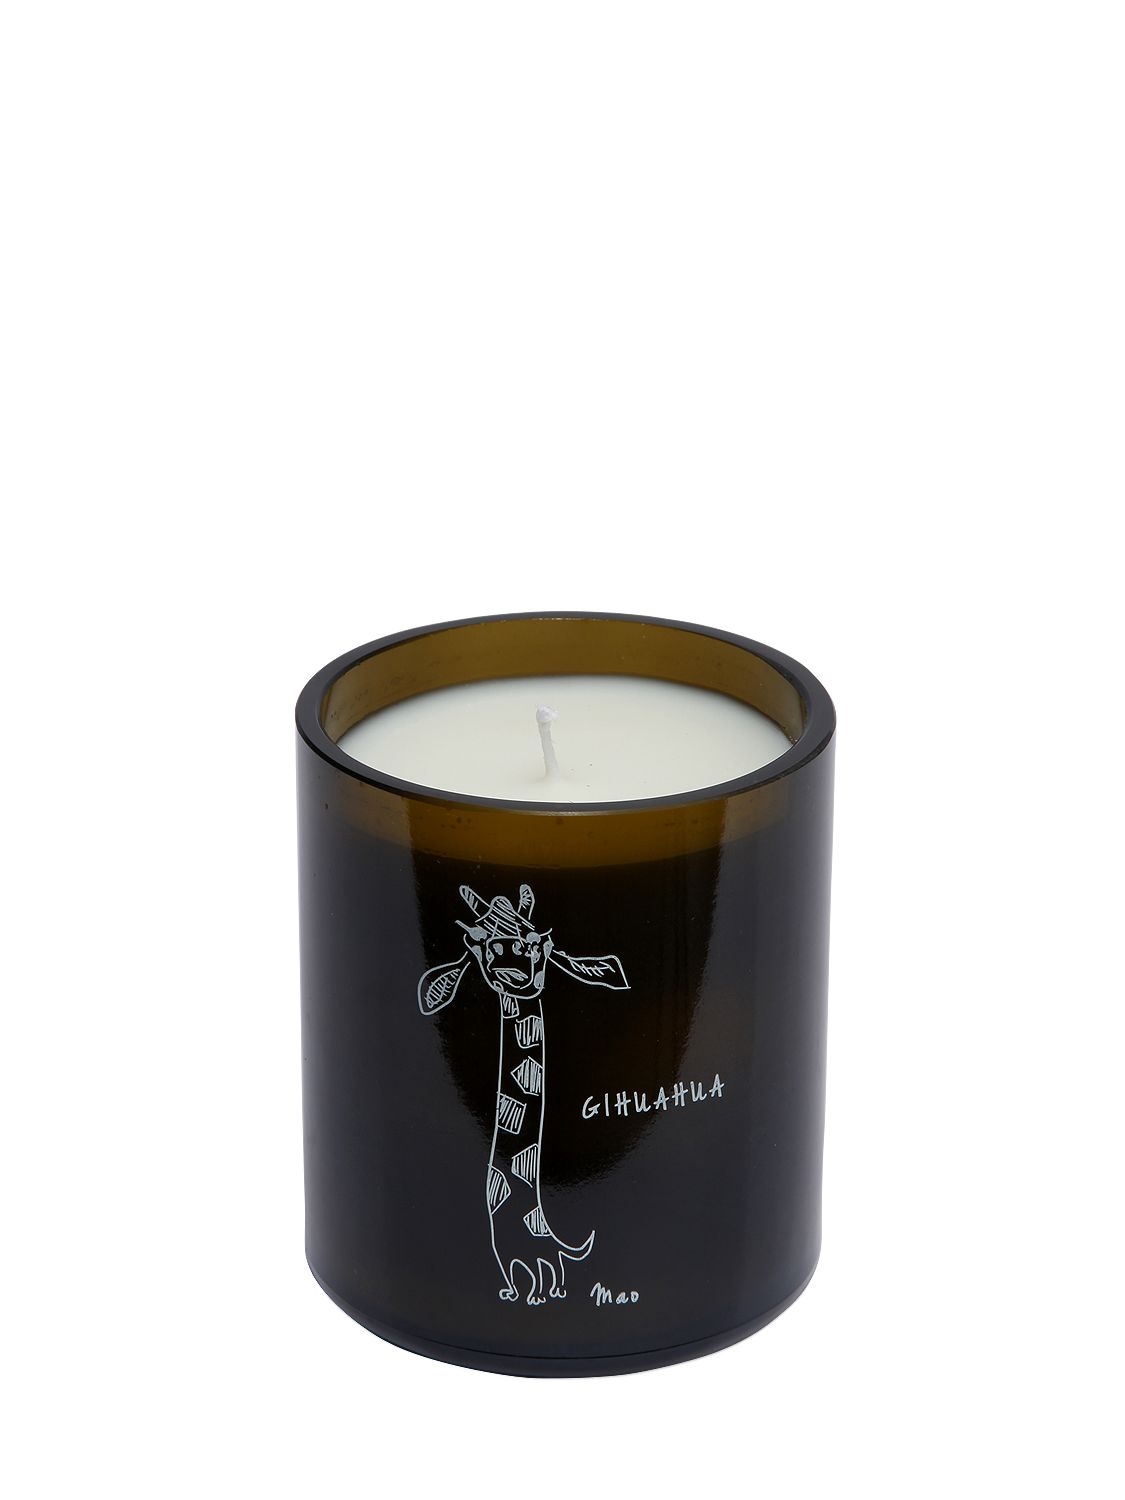 Maison Bereto "gihuahua"lvr特别版香氛蜡烛 In Black,white